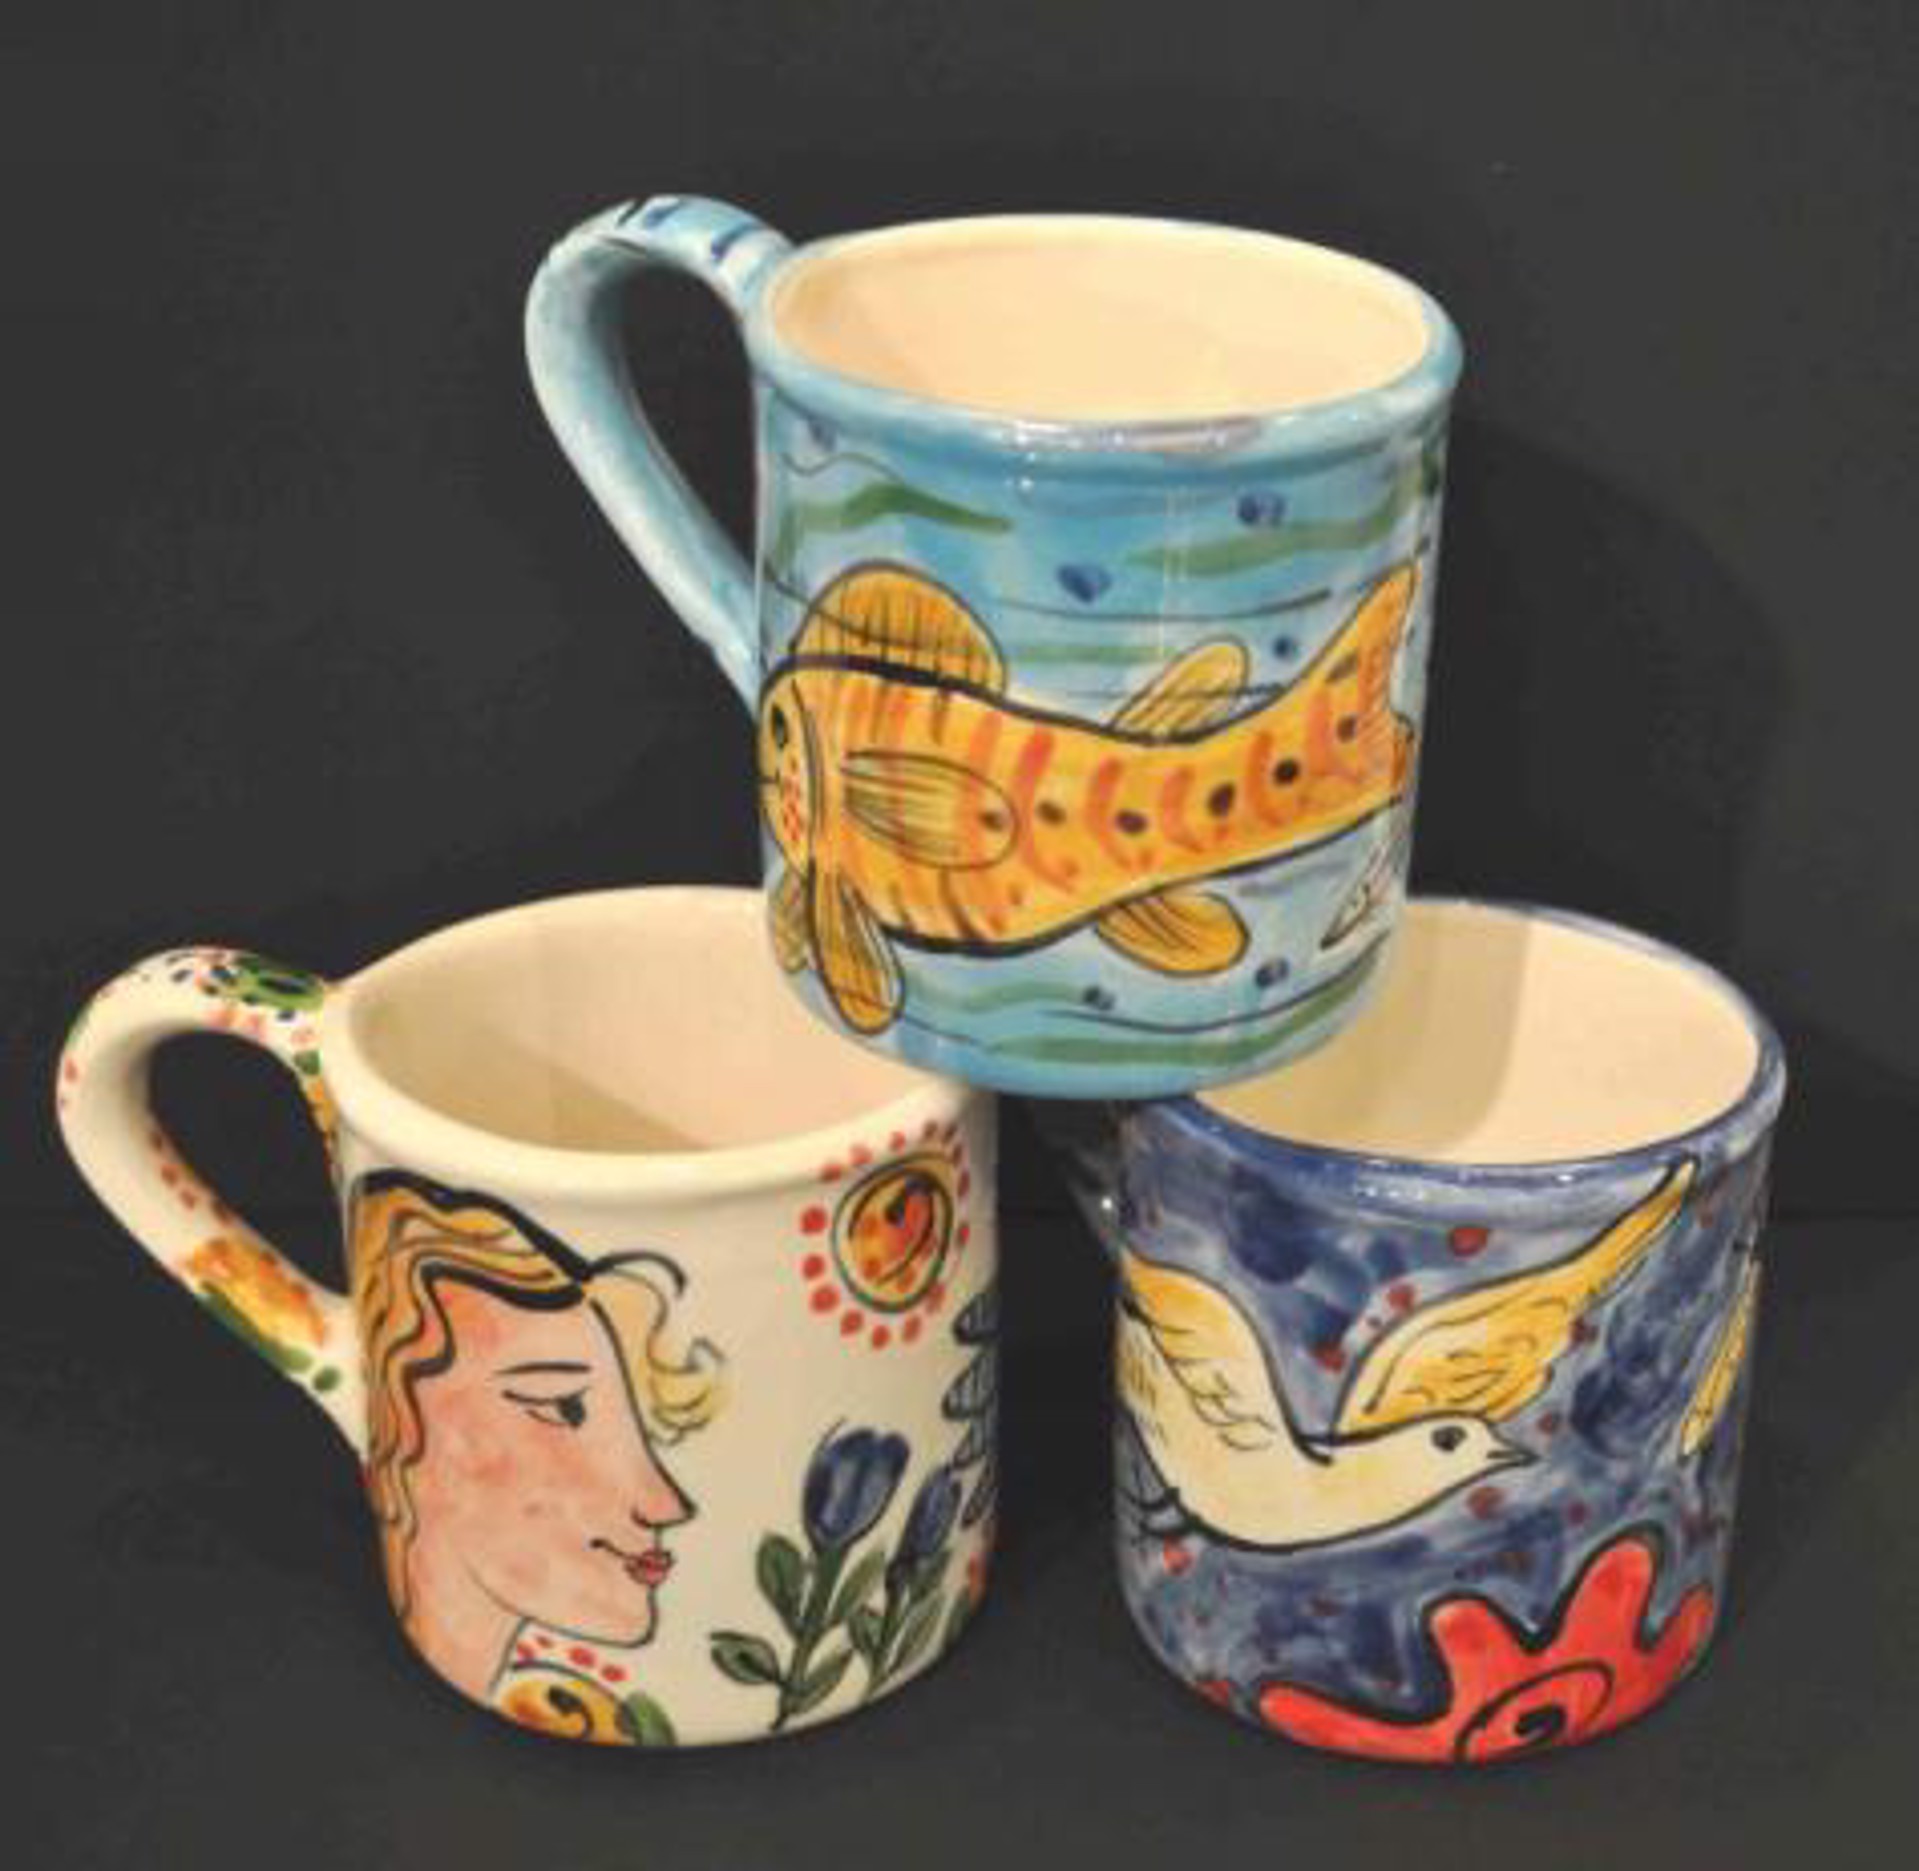 Assorted Cups by José Ventura